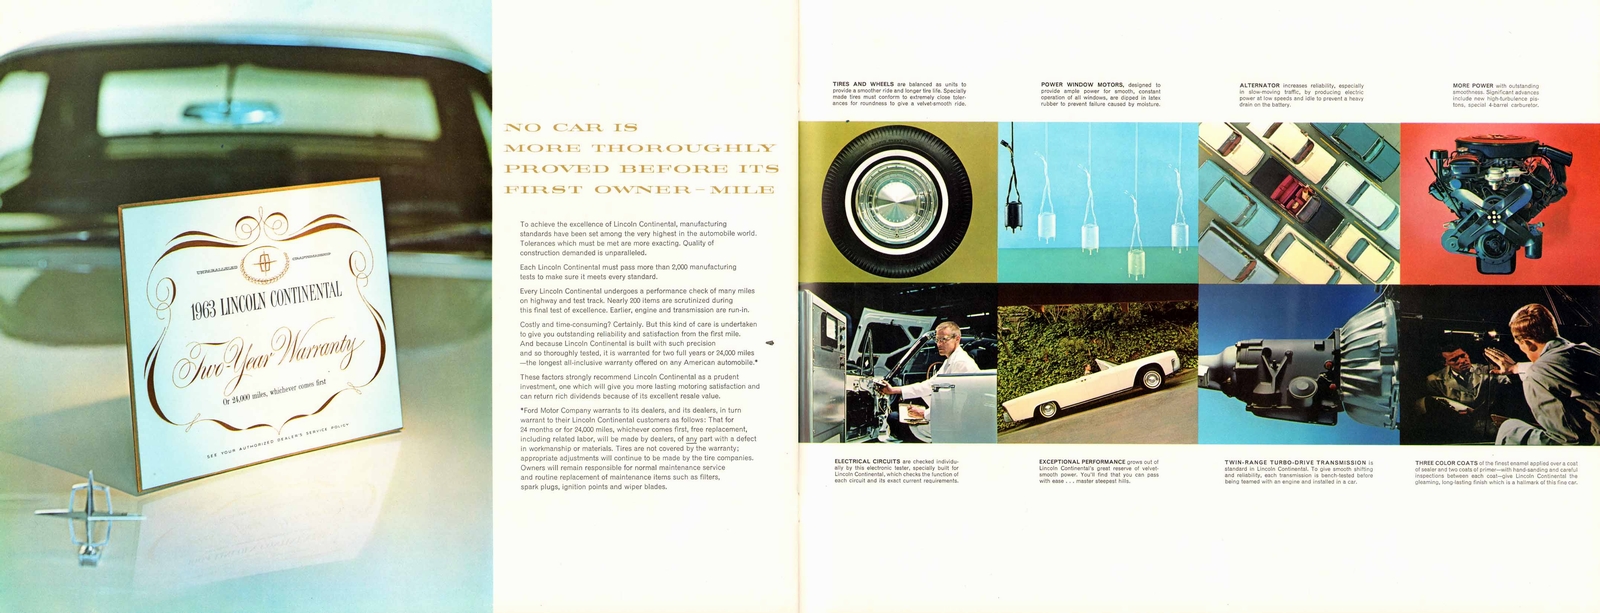 n_1963 Lincoln Continental Prestige-18-19.jpg